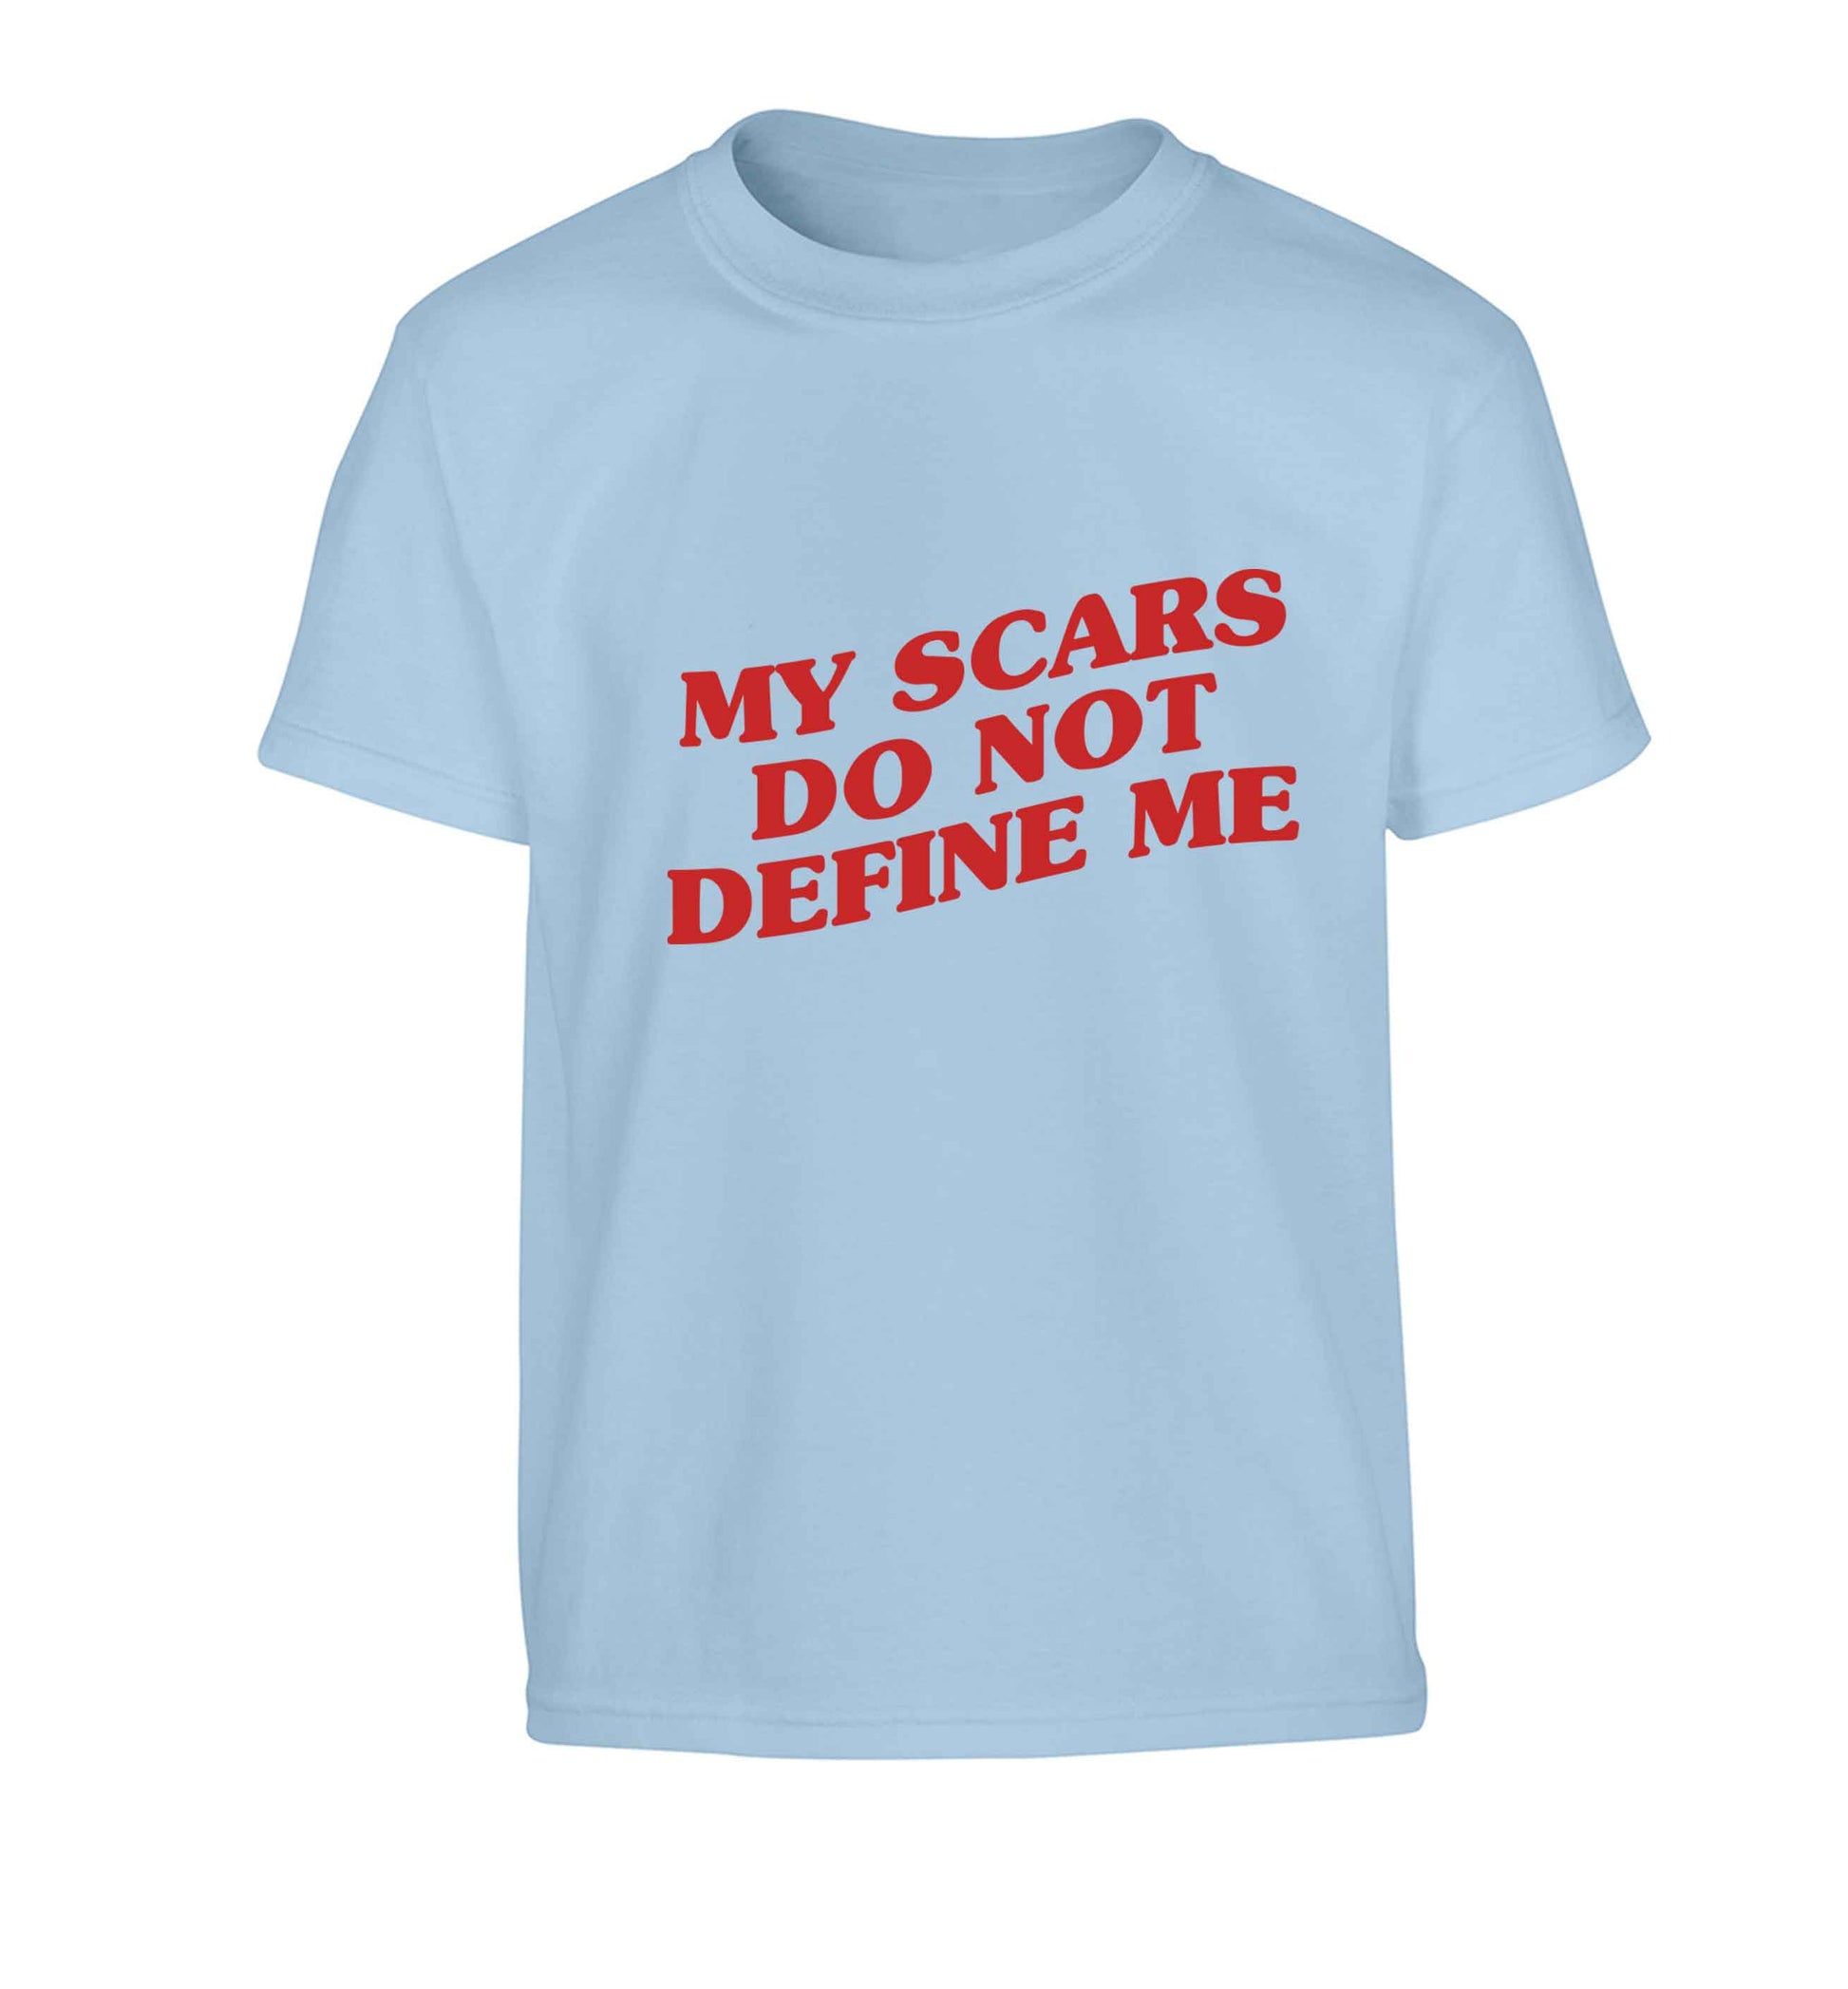 My scars do not define me Children's light blue Tshirt 12-13 Years